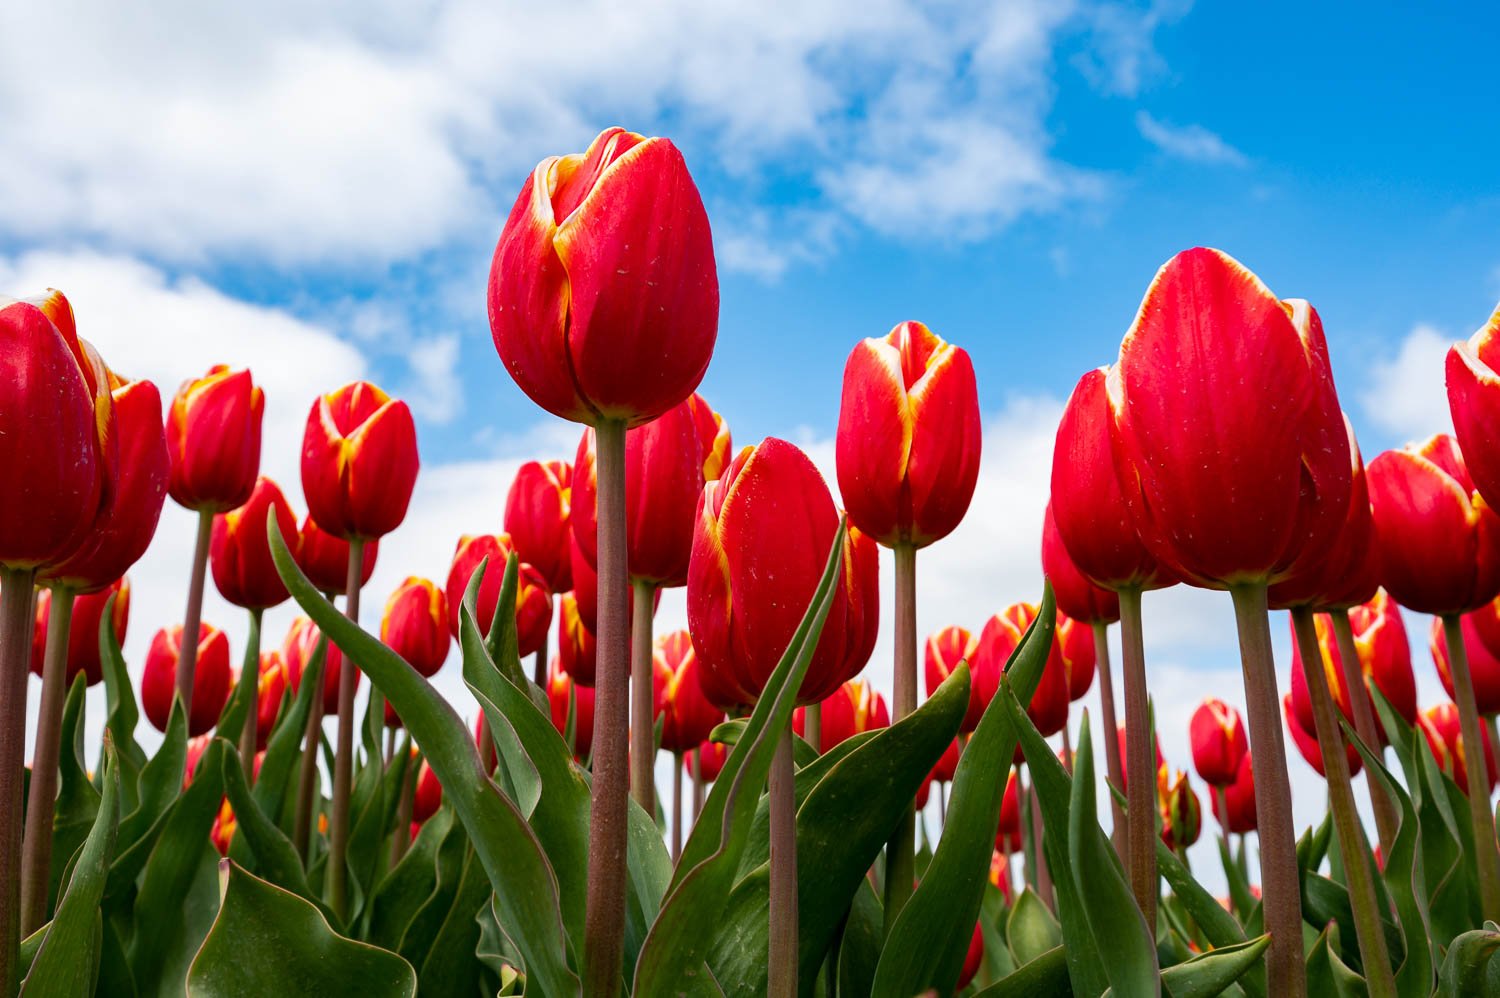 Tulip bulbs production industry, red tulip flowers fields in blo (Copy)